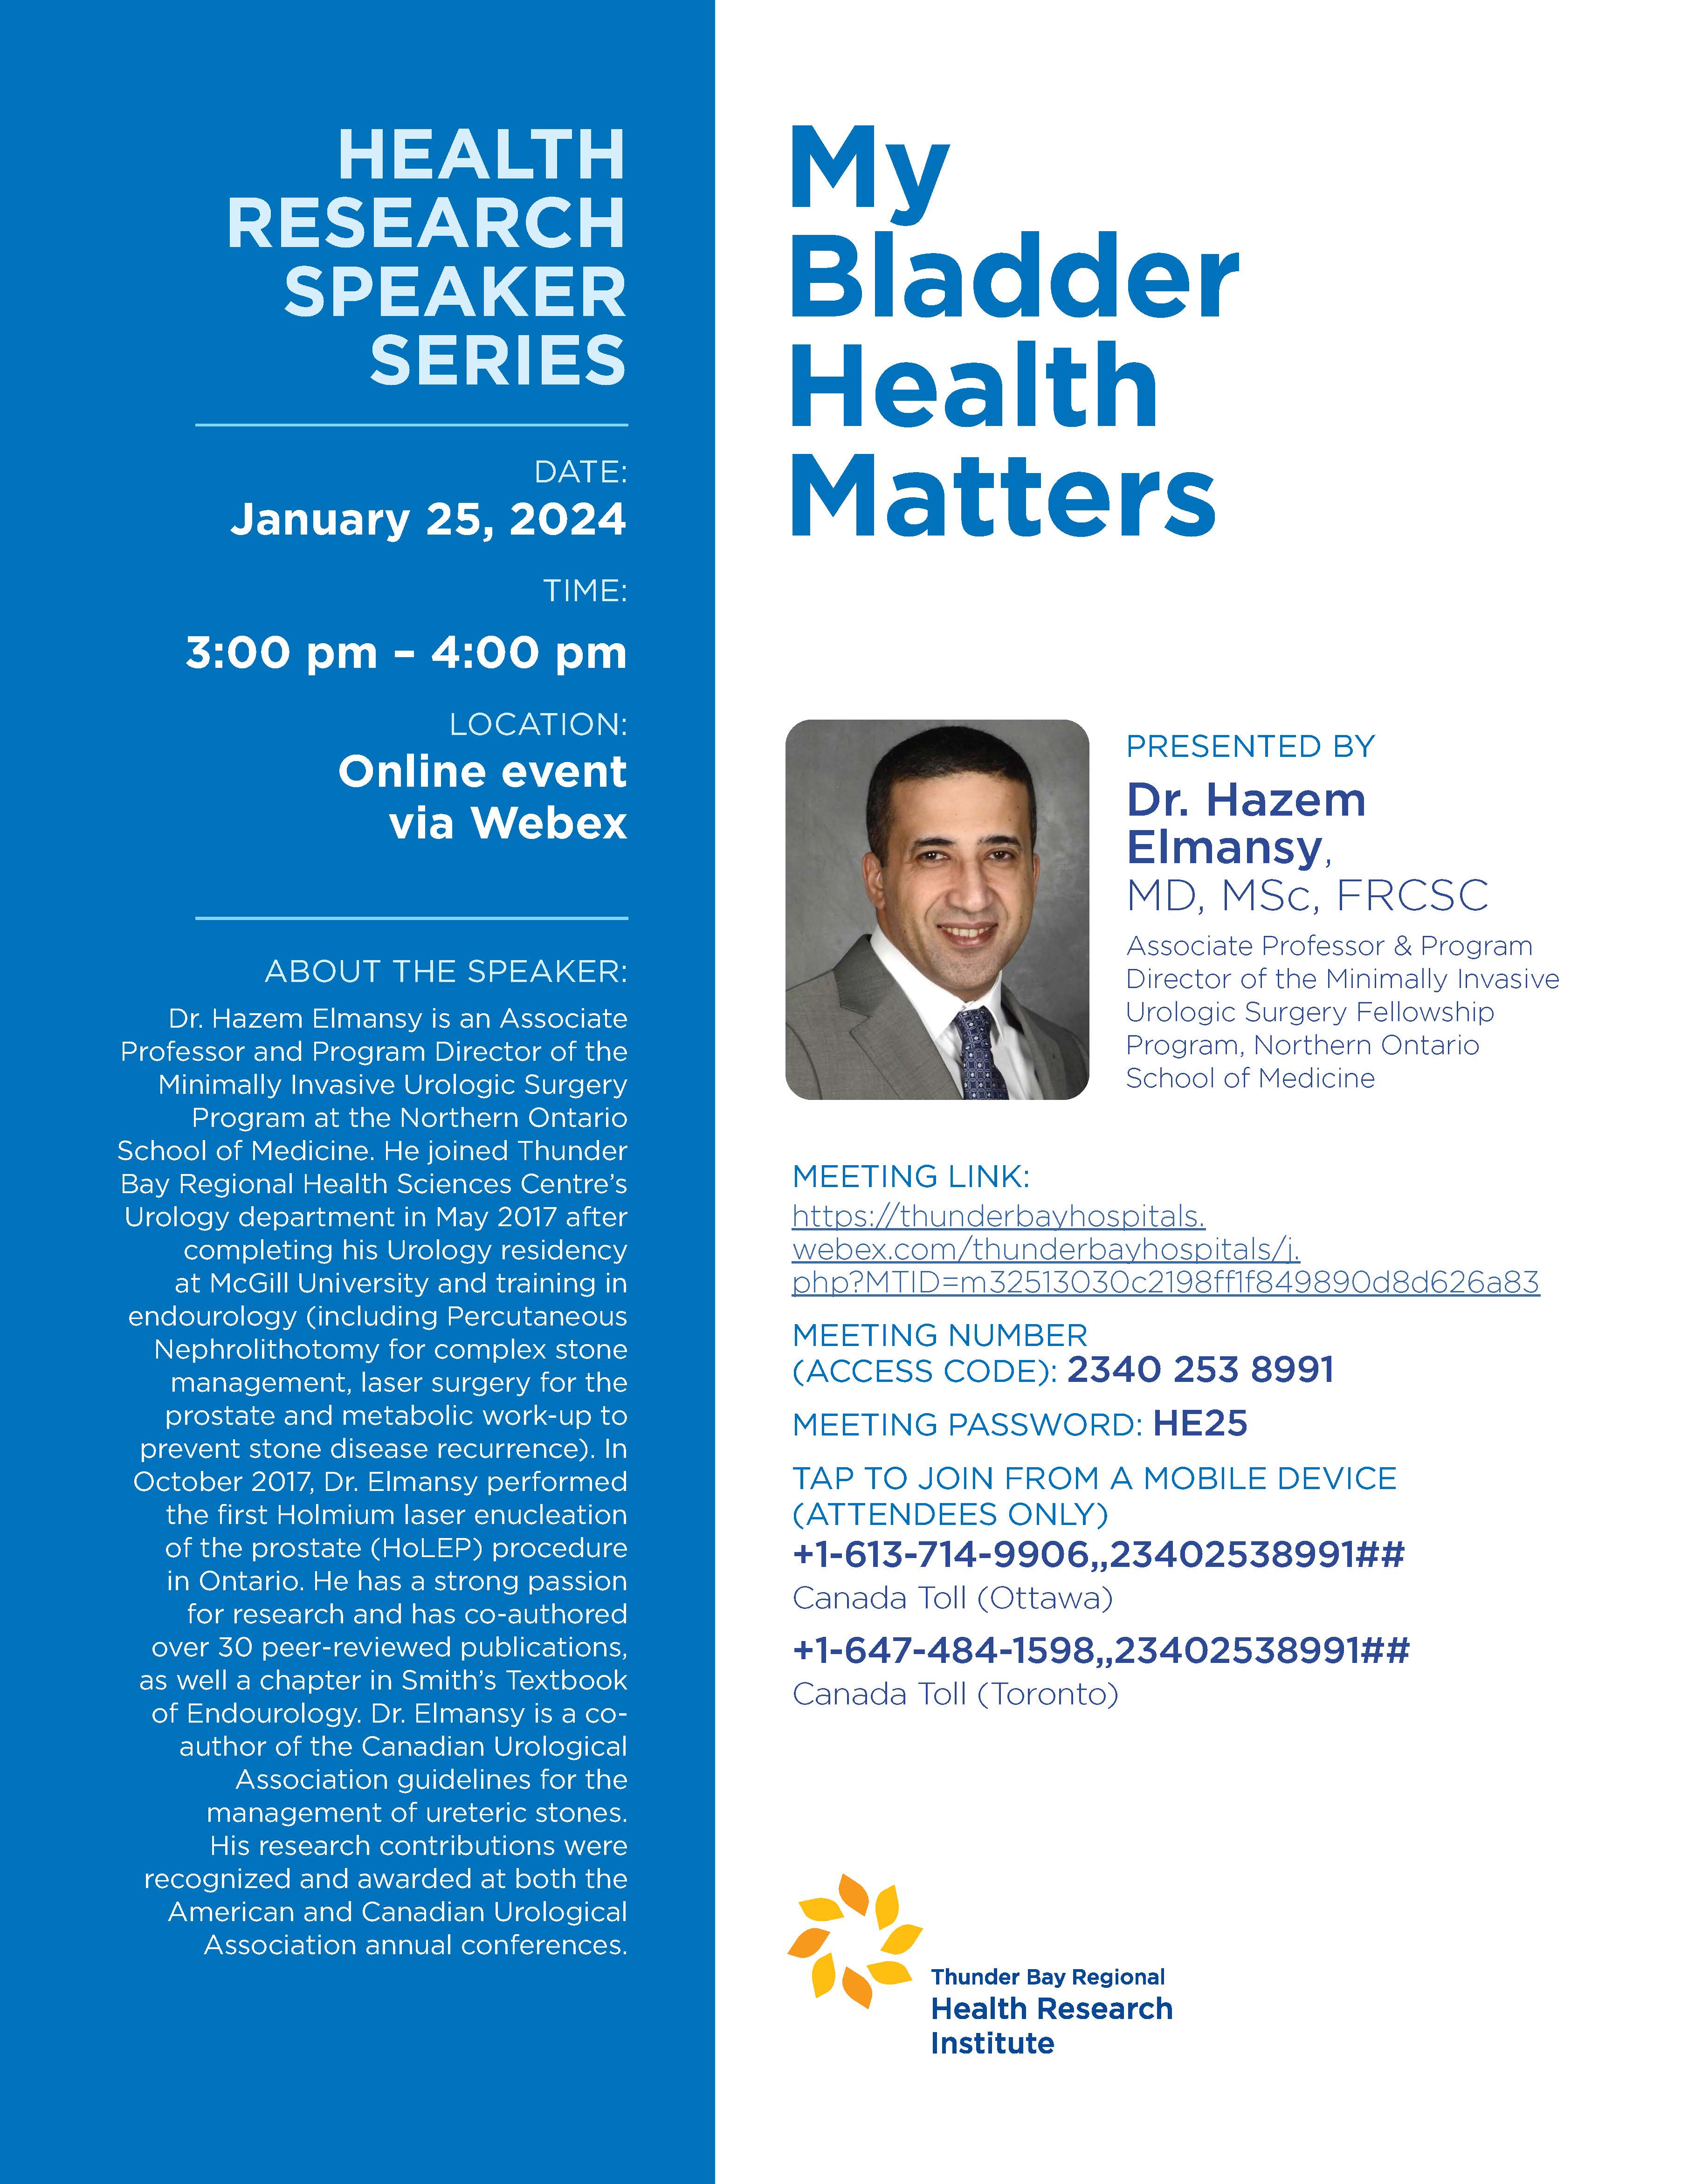 Dr. Hazem Elmansy Event Poster: My Bladder Health Matters